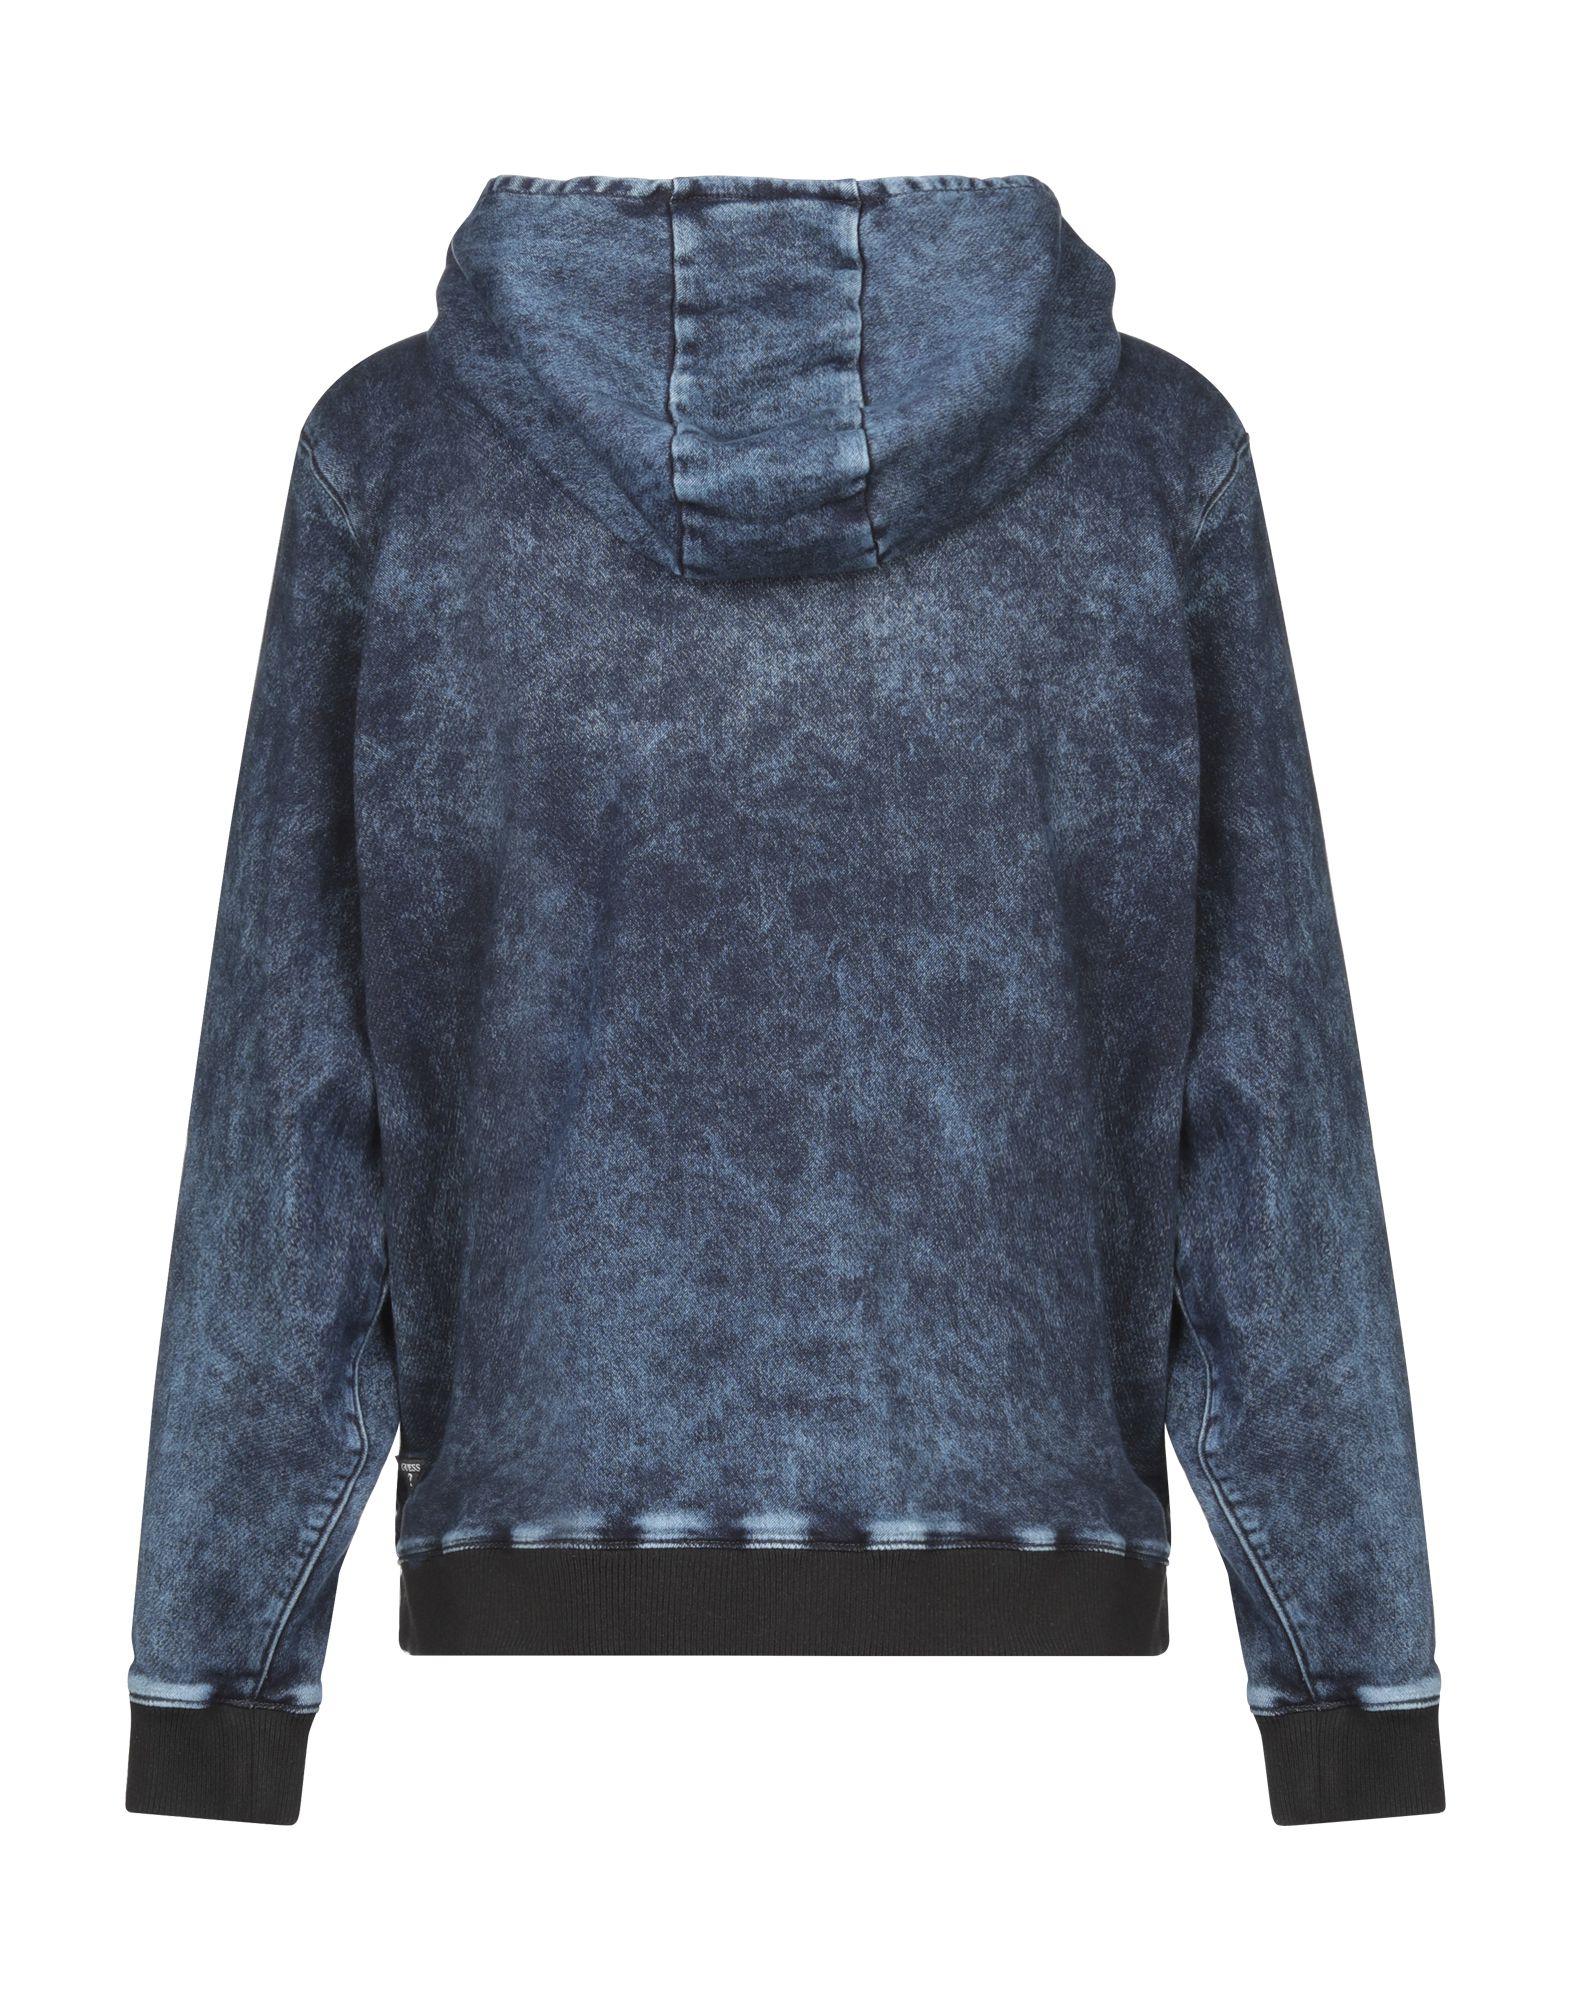 Guess Denim Sweatshirt in Dark Blue (Blue) for Men - Lyst